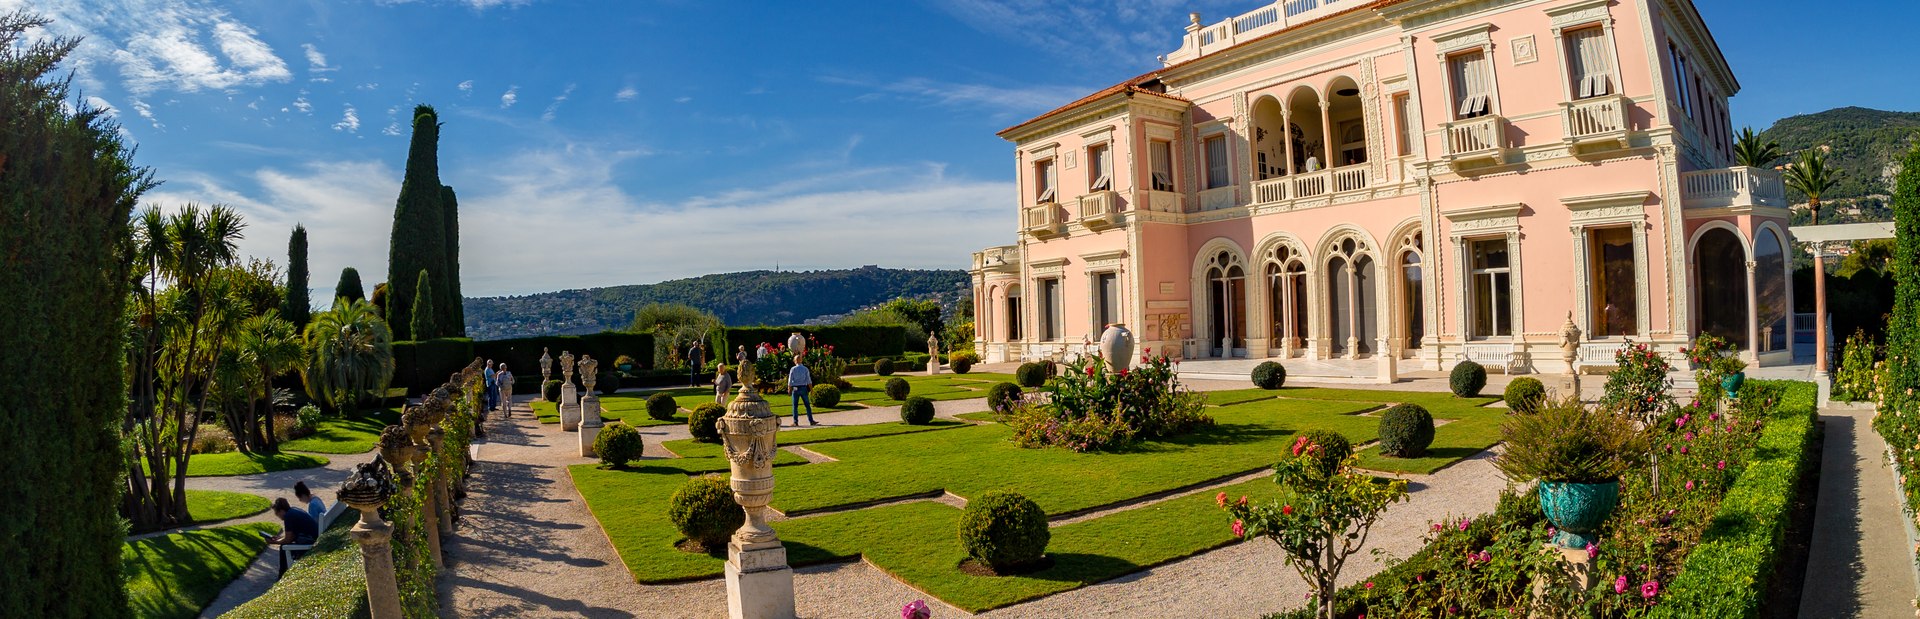 Villa Ephrussi de Rothschild Image 1